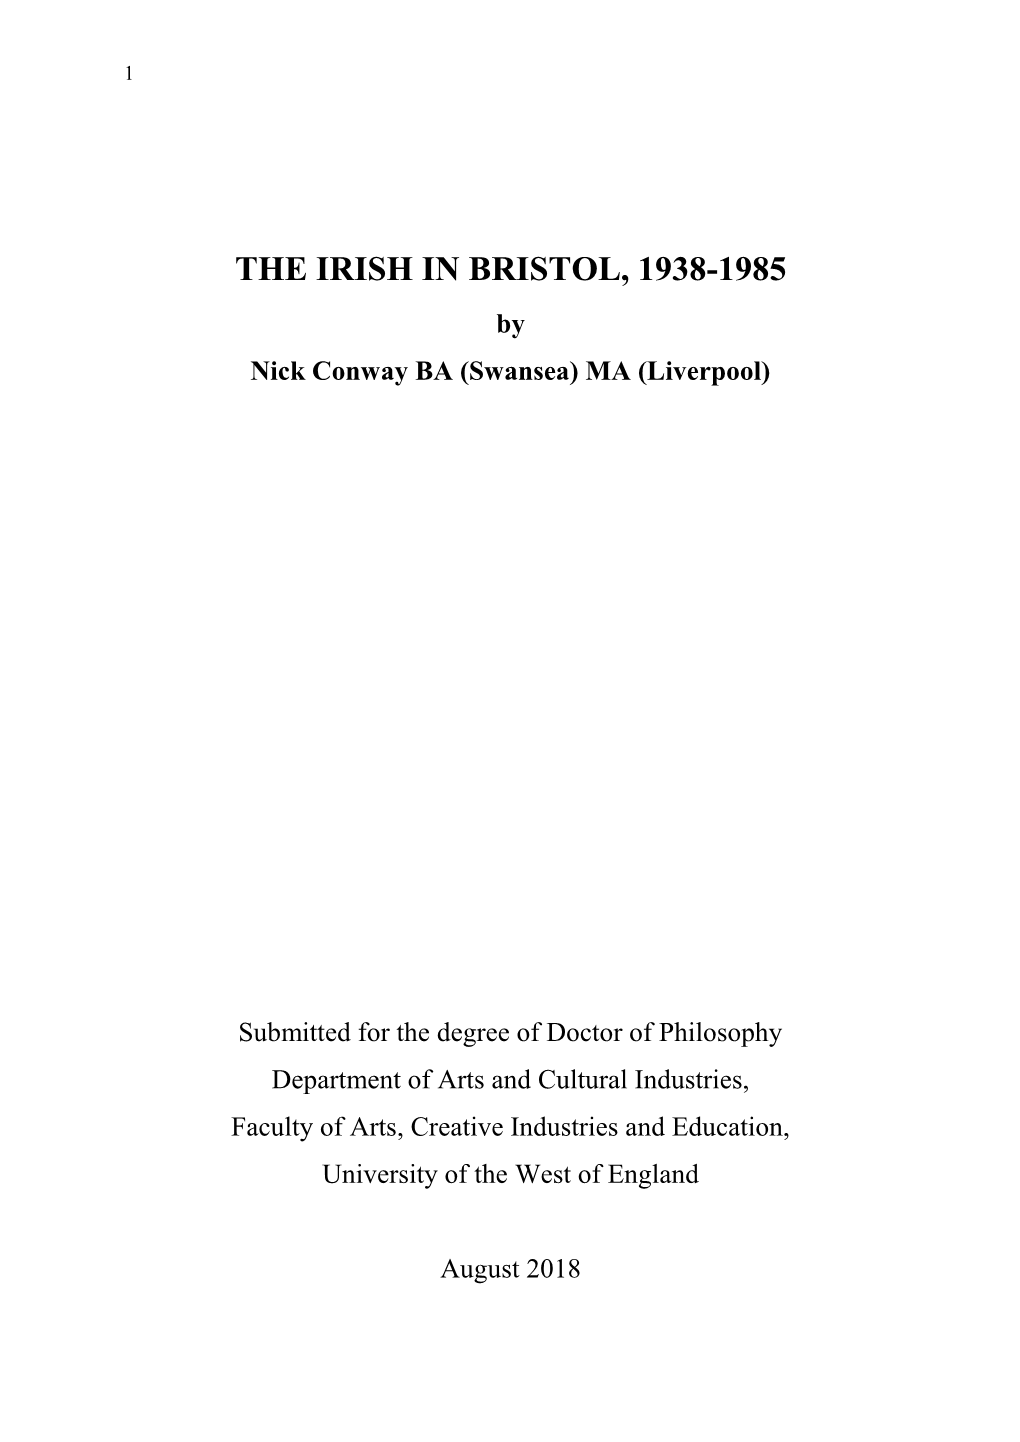 THE IRISH in BRISTOL, 1938-1985 by Nick Conway BA (Swansea) MA (Liverpool)